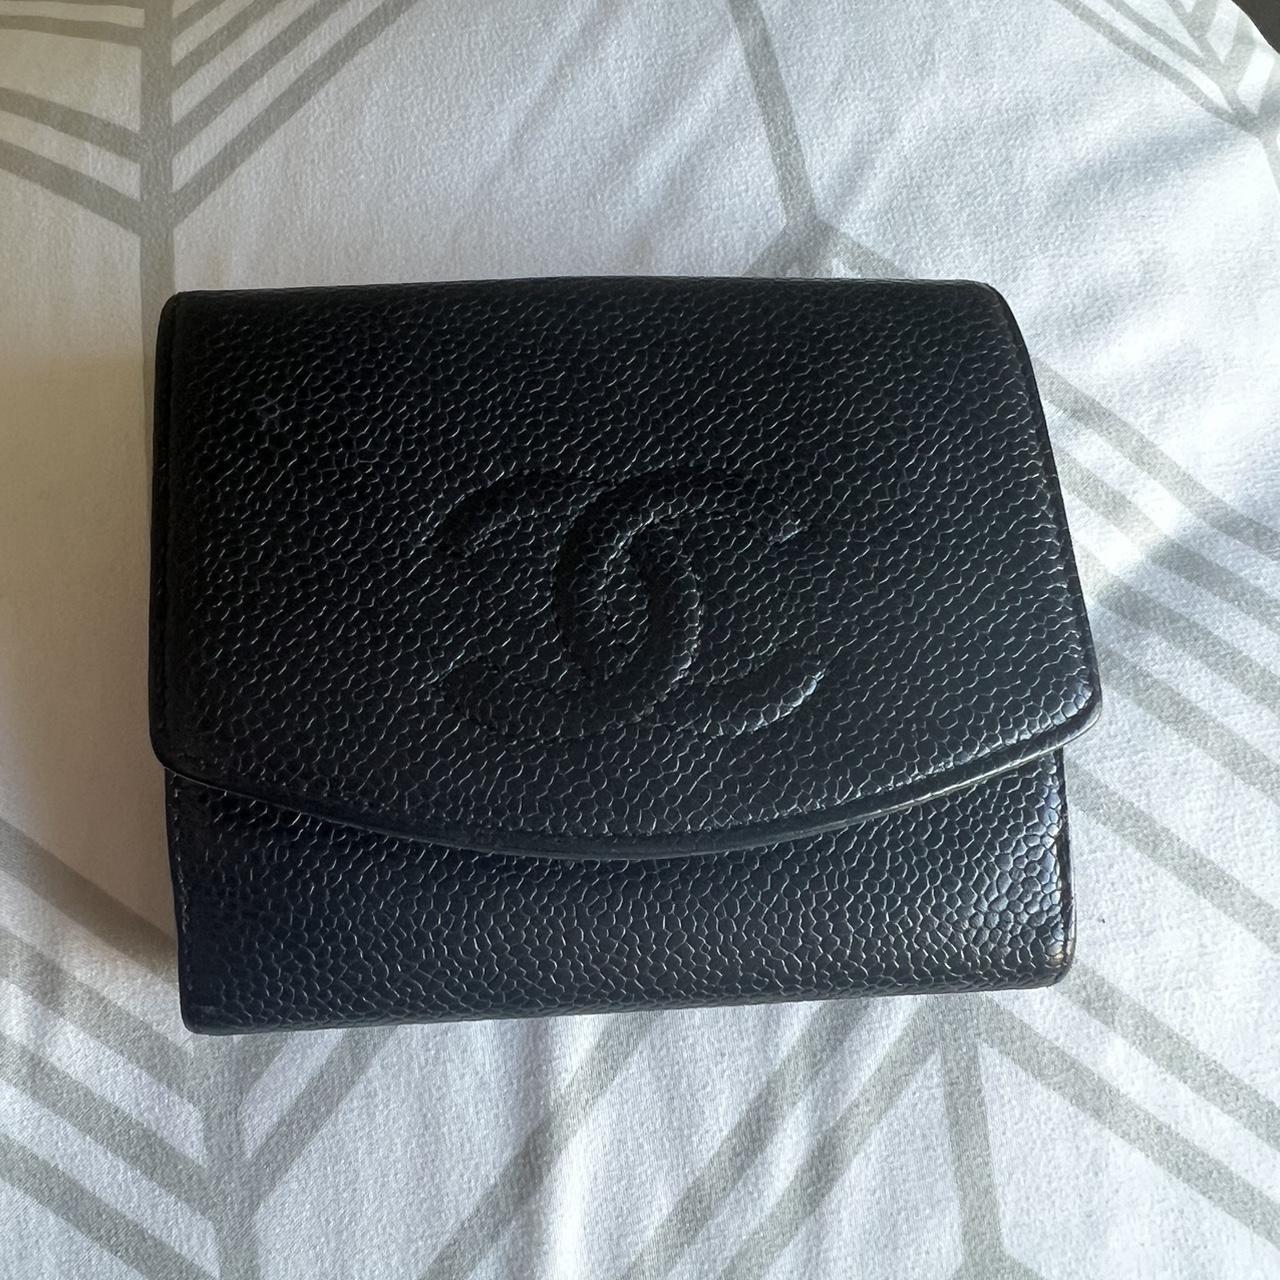 Chanel bifold wallet